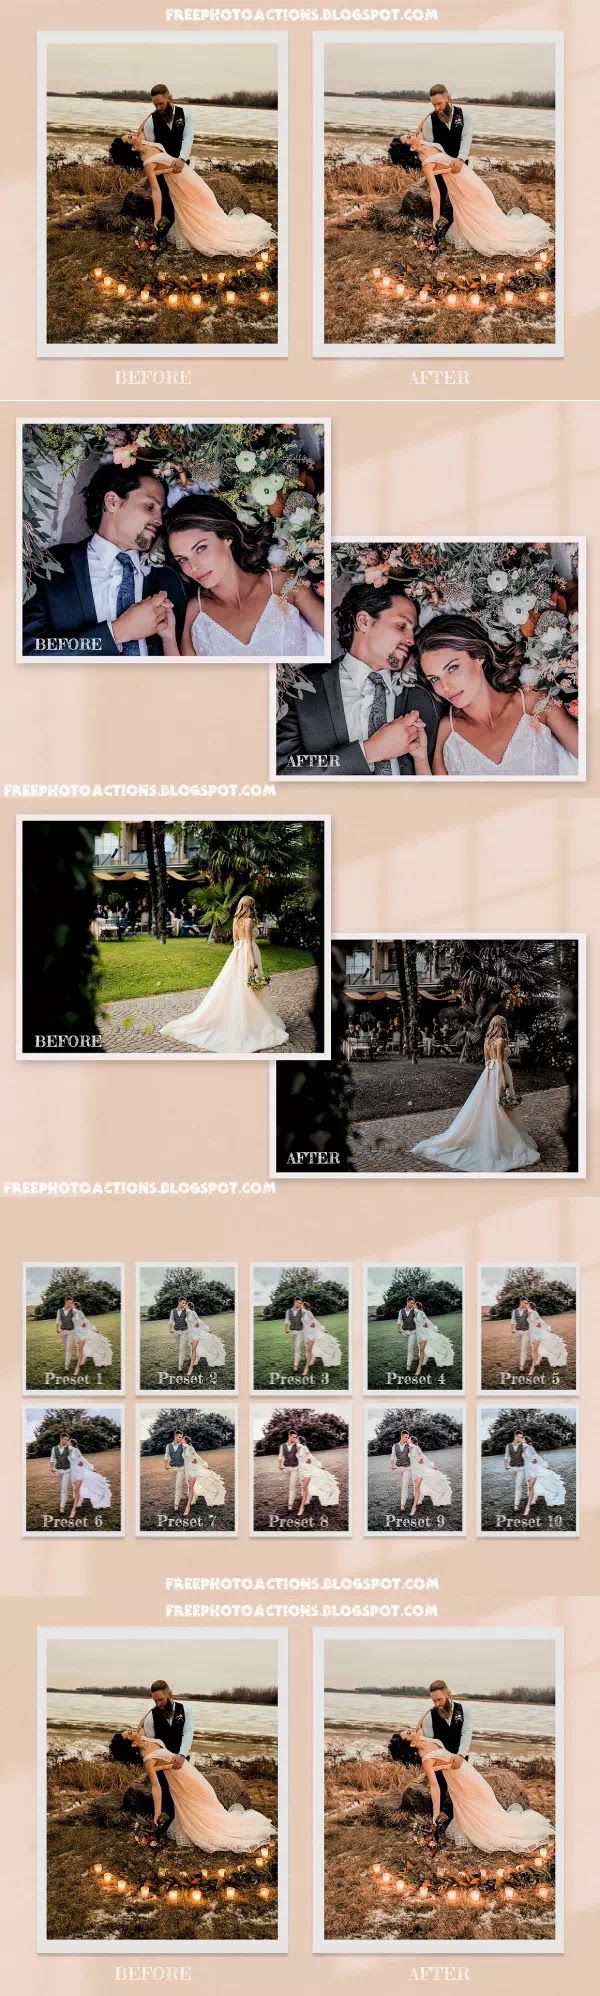 10-rustic-wedding-collection-preset-1